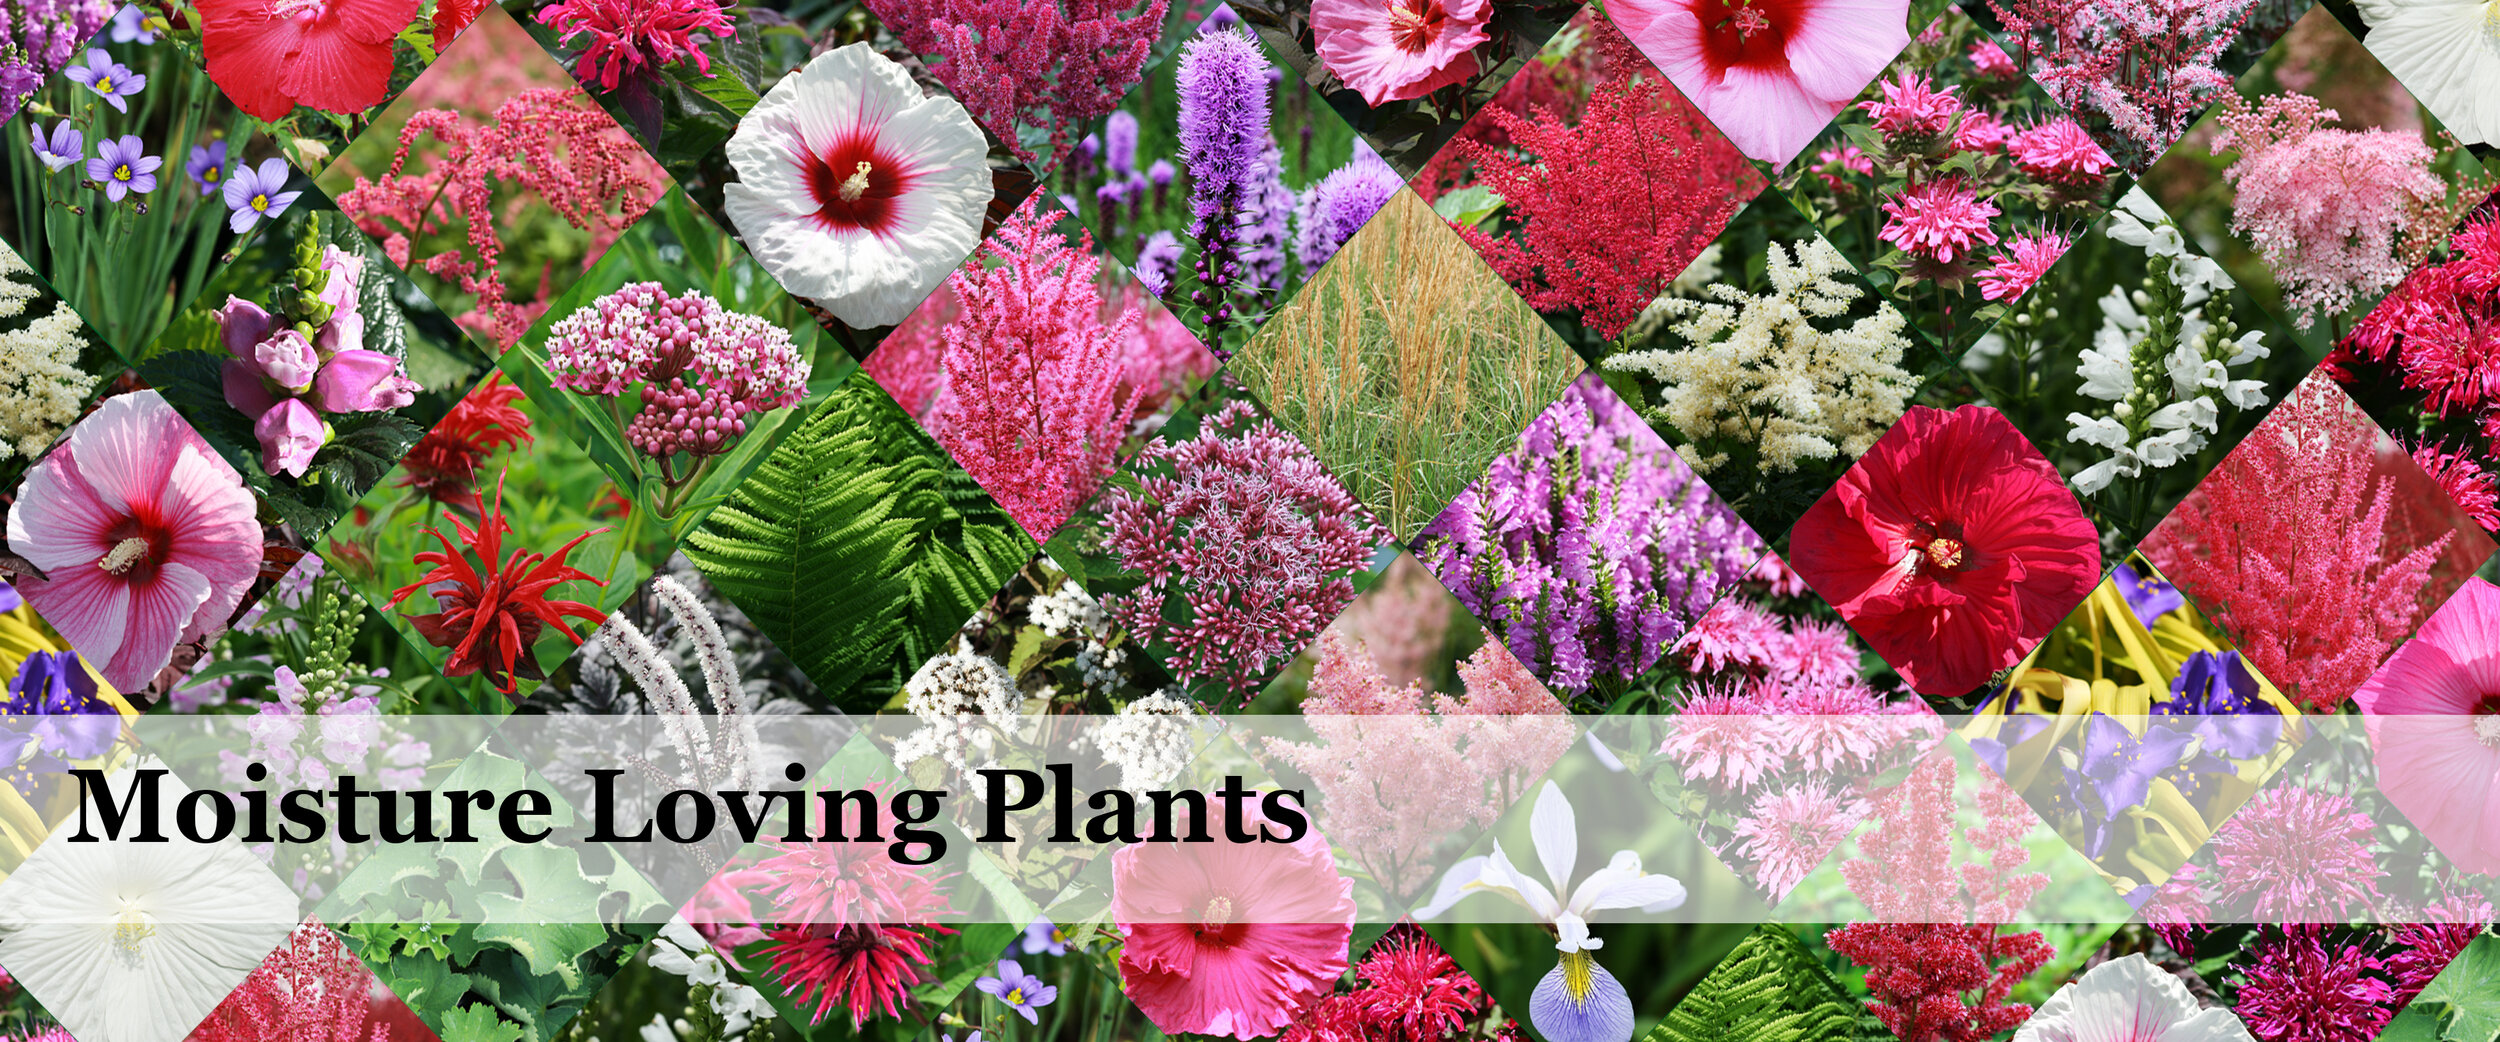 Moisture Loving Plants